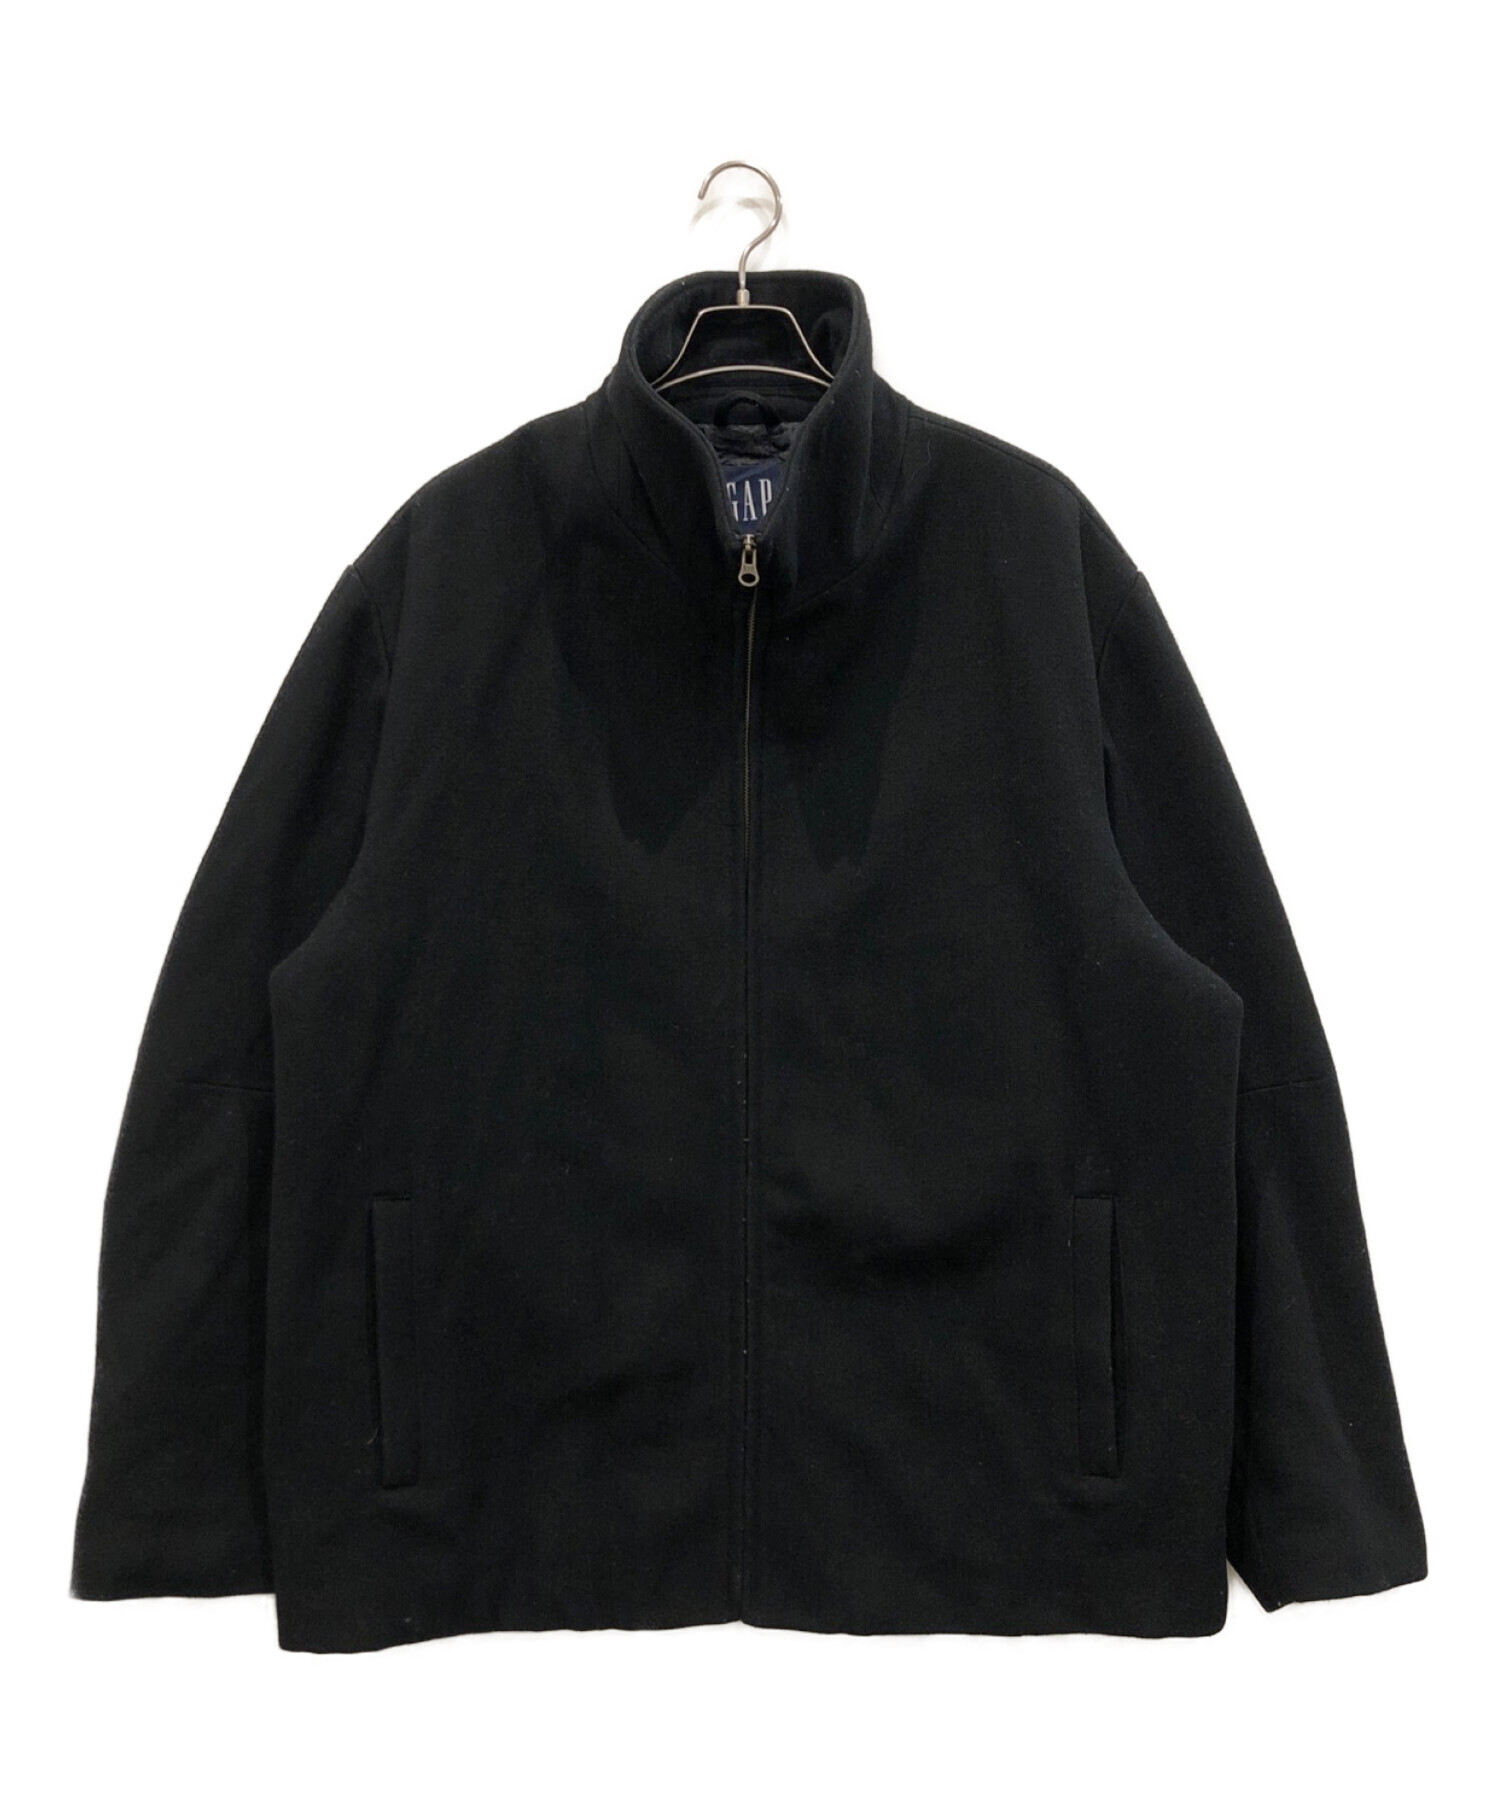 GAP (ギャップ) ウールジップジャケット ブラック サイズ:XL